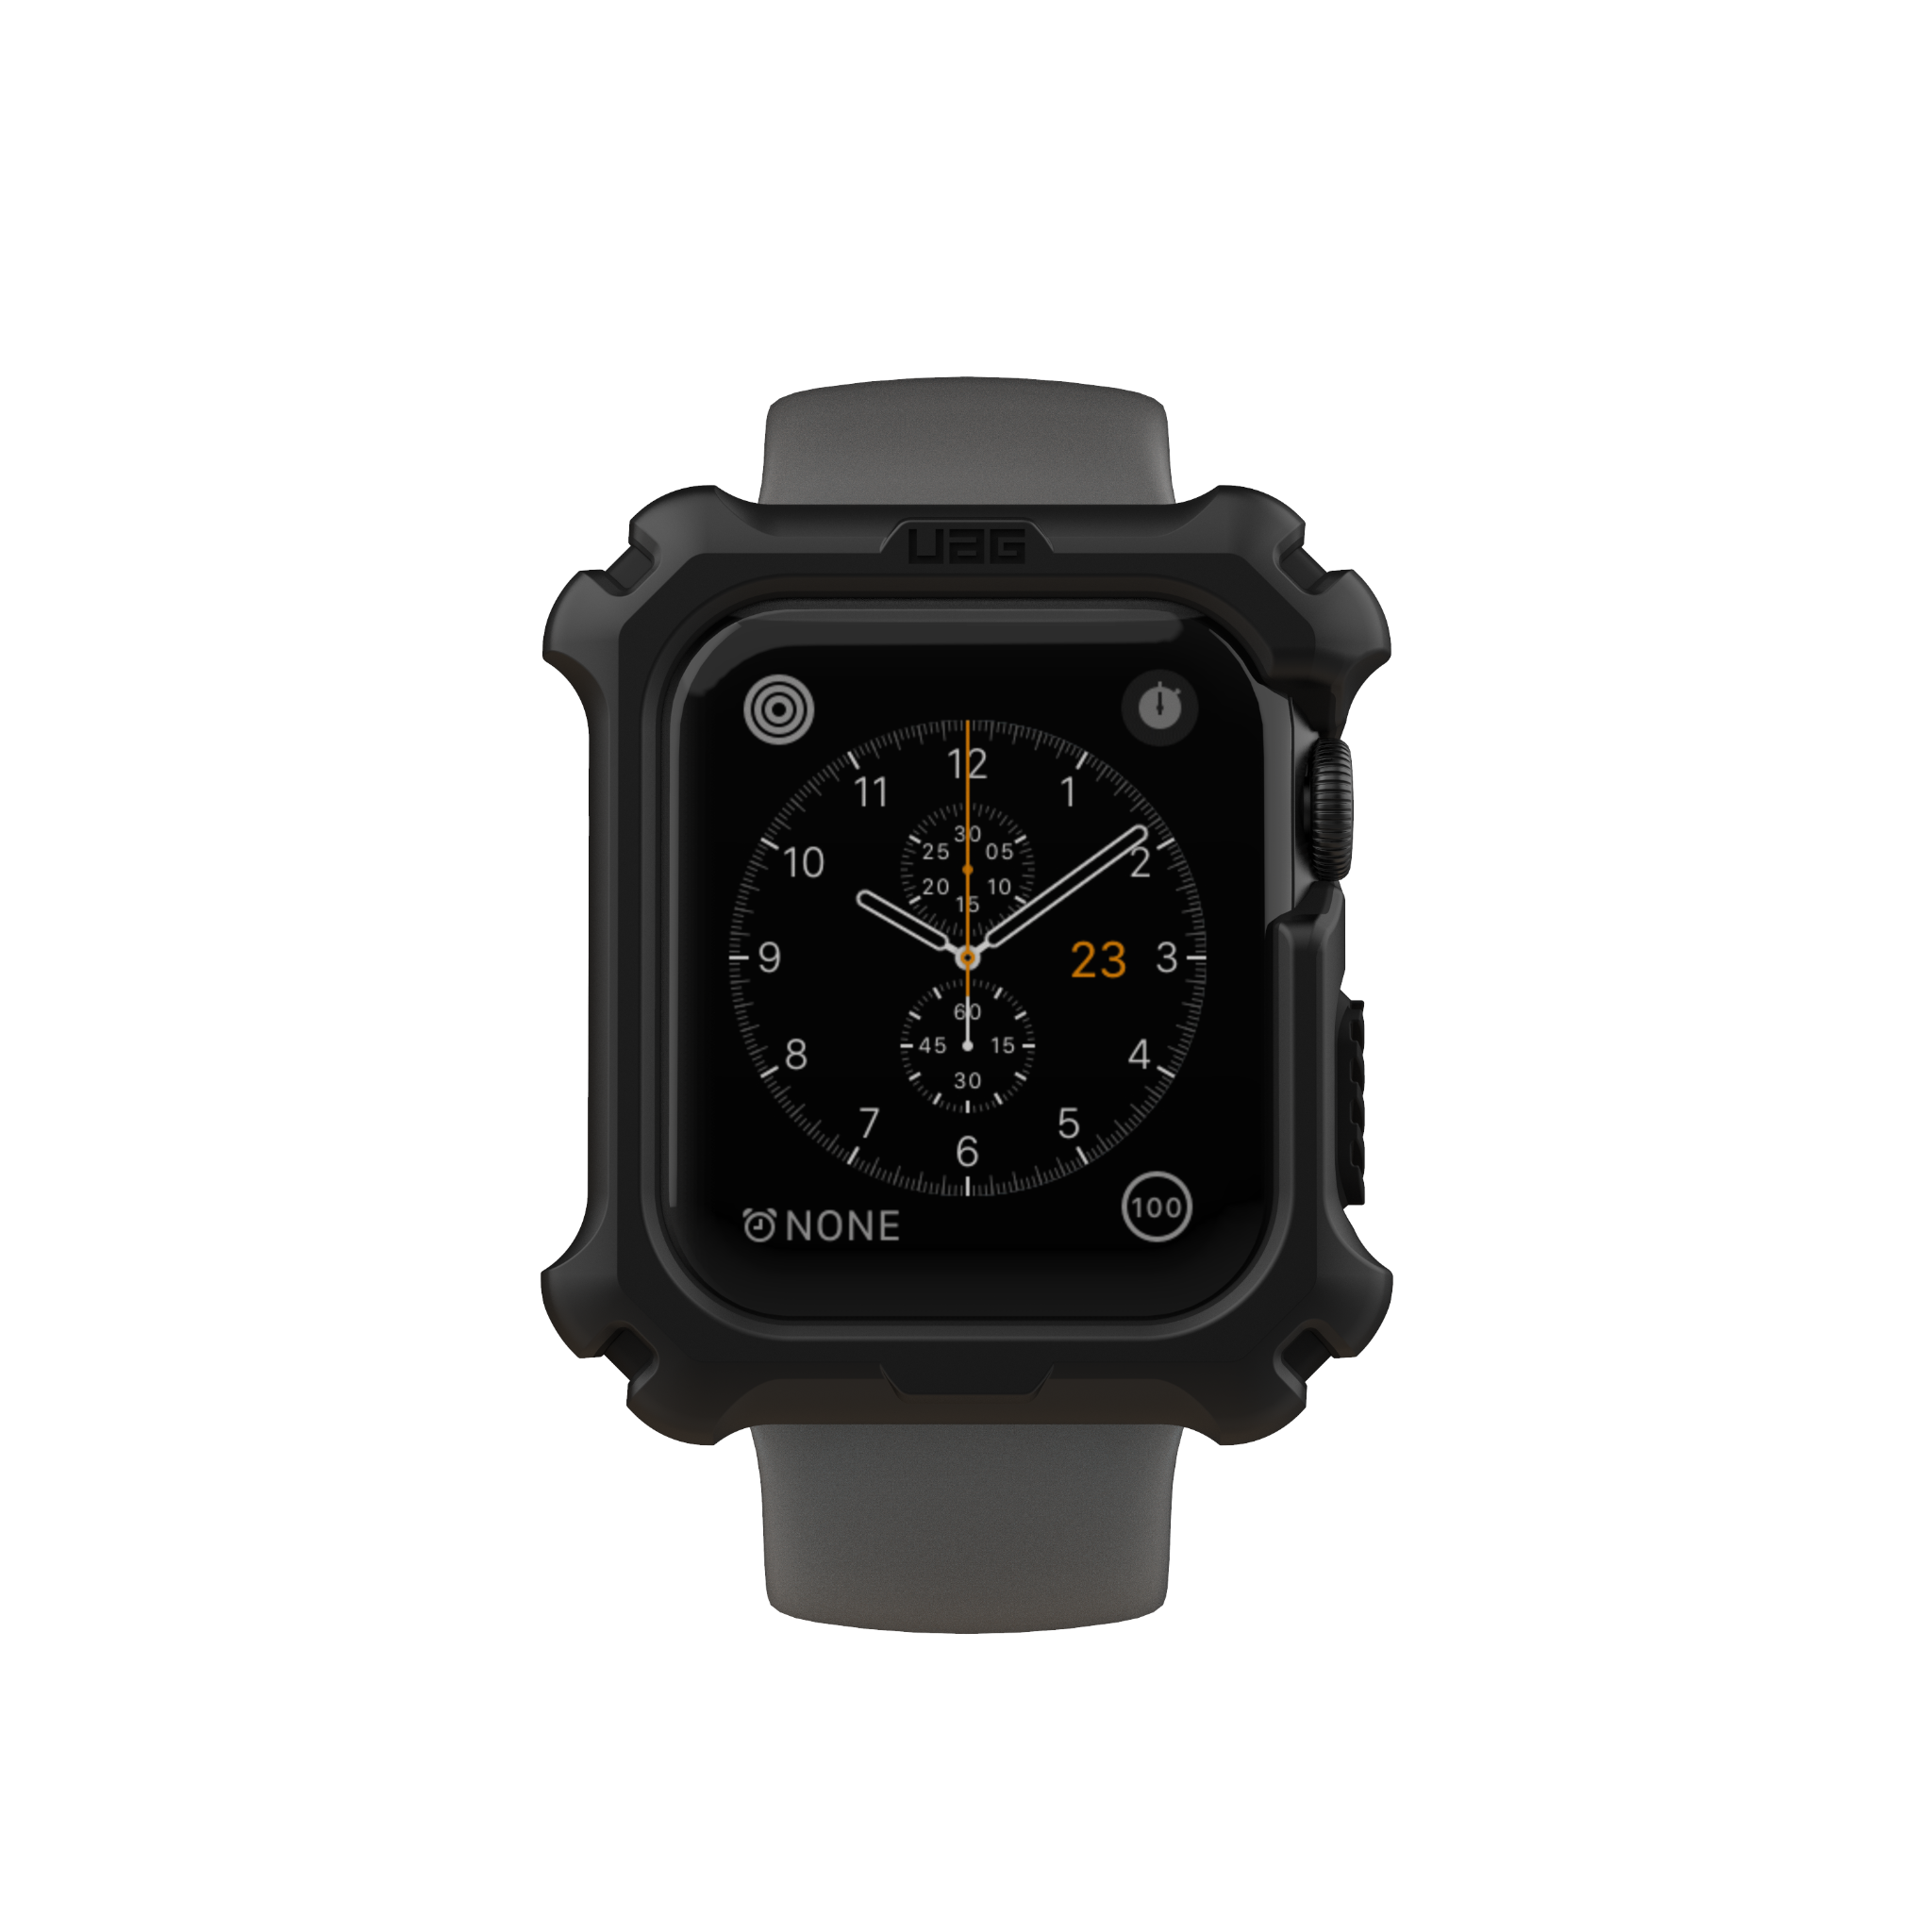  Ốp chống sốc UAG cho Apple Watch 44mm 